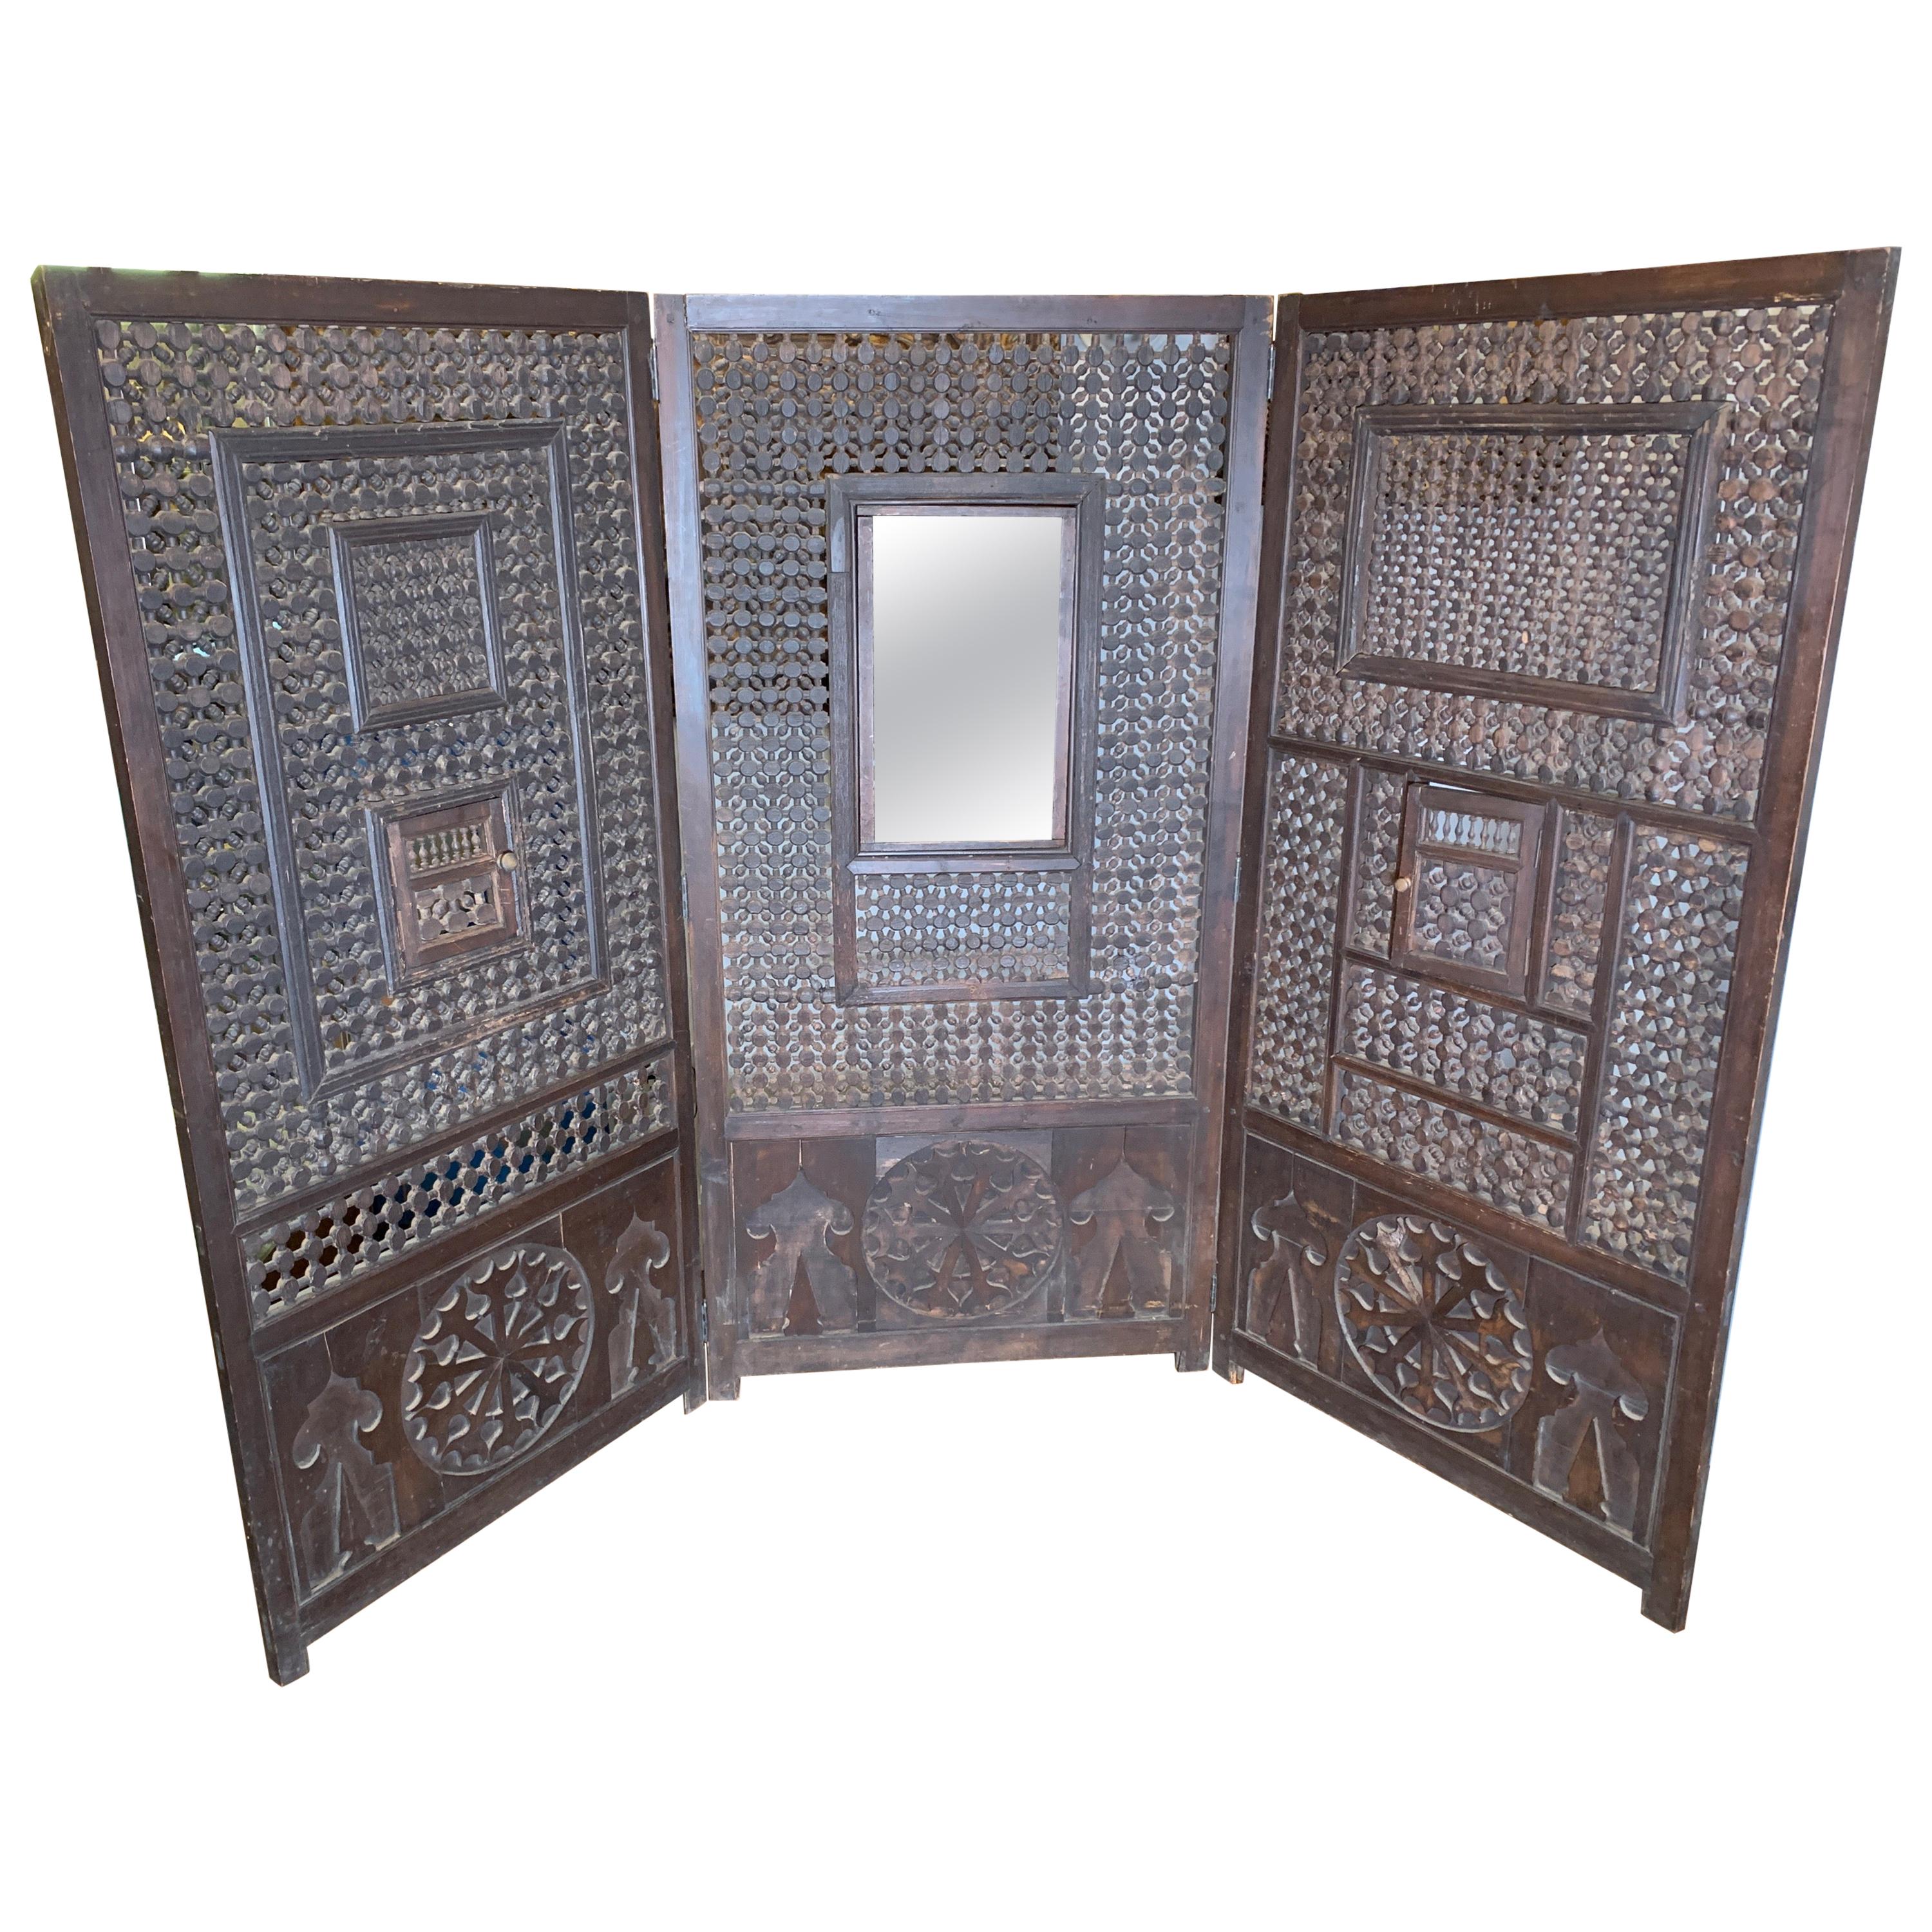 Wooden Folding Screen Made from 19th Century Harem Door Panels